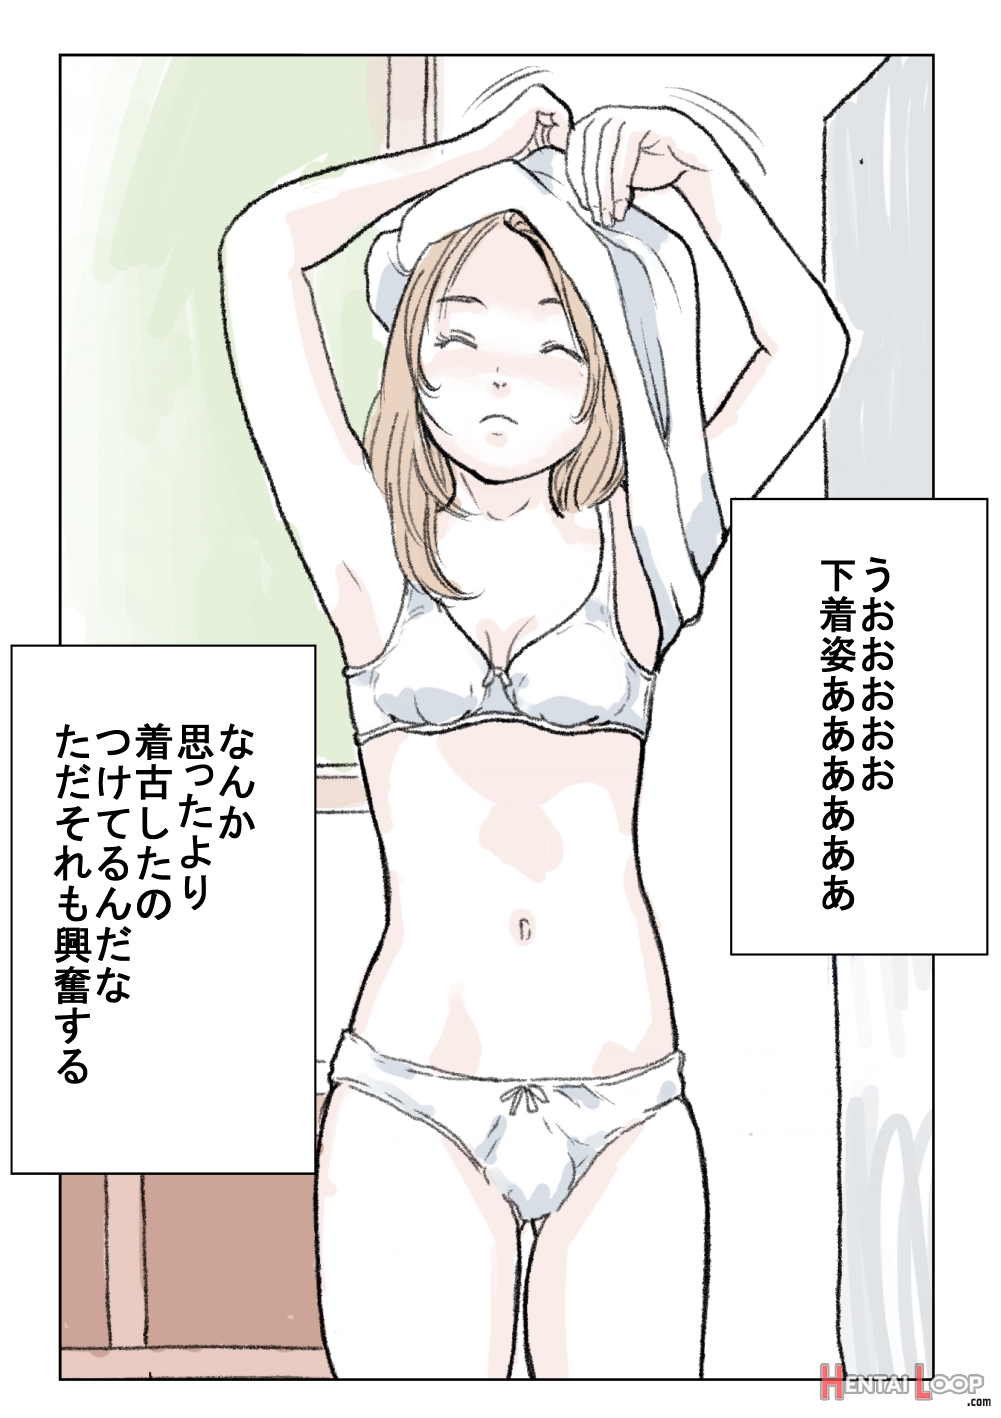 Nozoki page 7